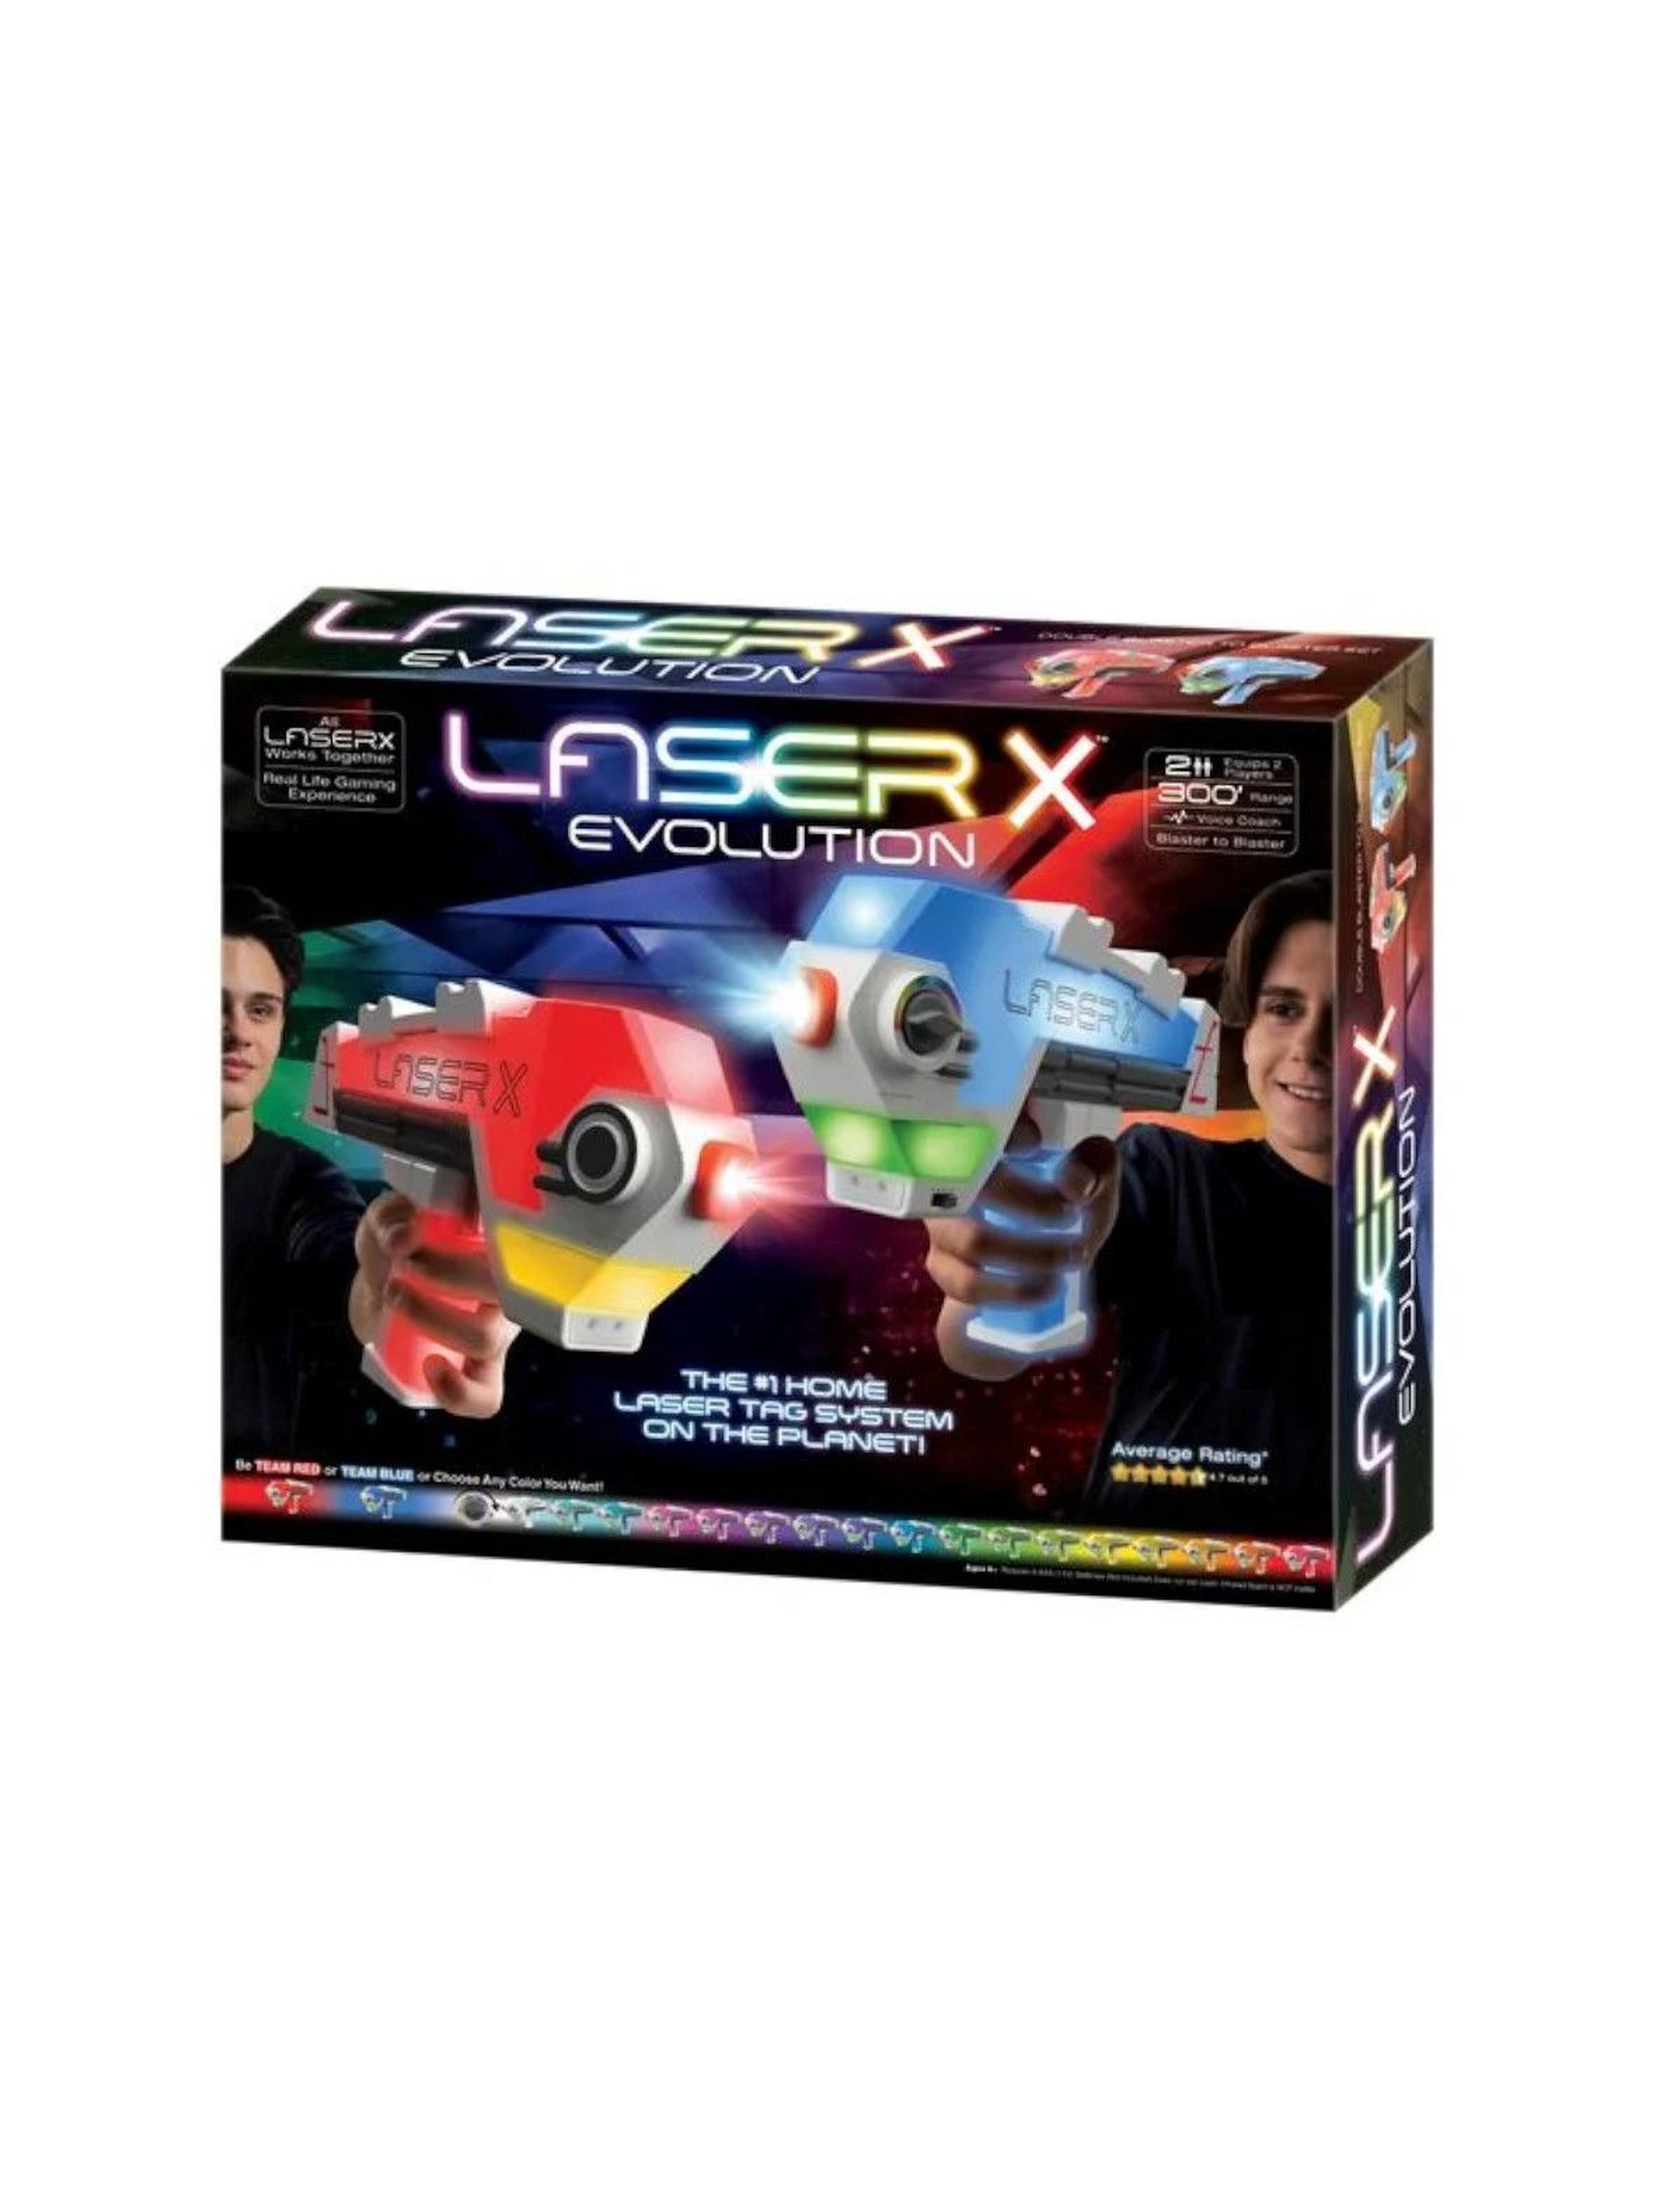 Gra high-tech Laser X Evolution Blaster wiek 6+